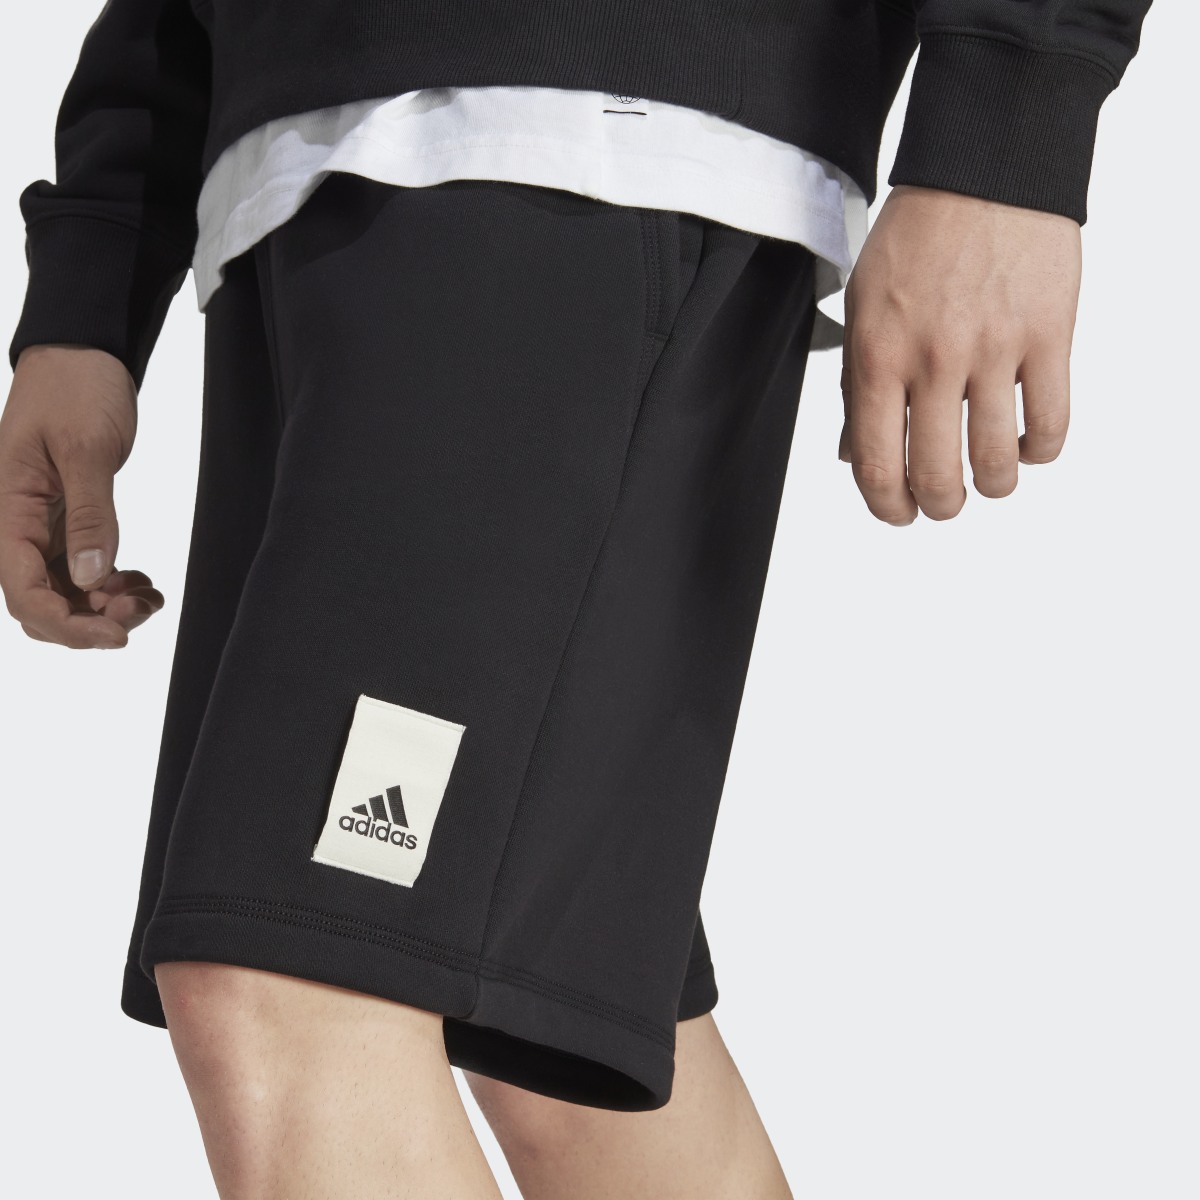 Adidas Lounge Fleece Shorts. 5